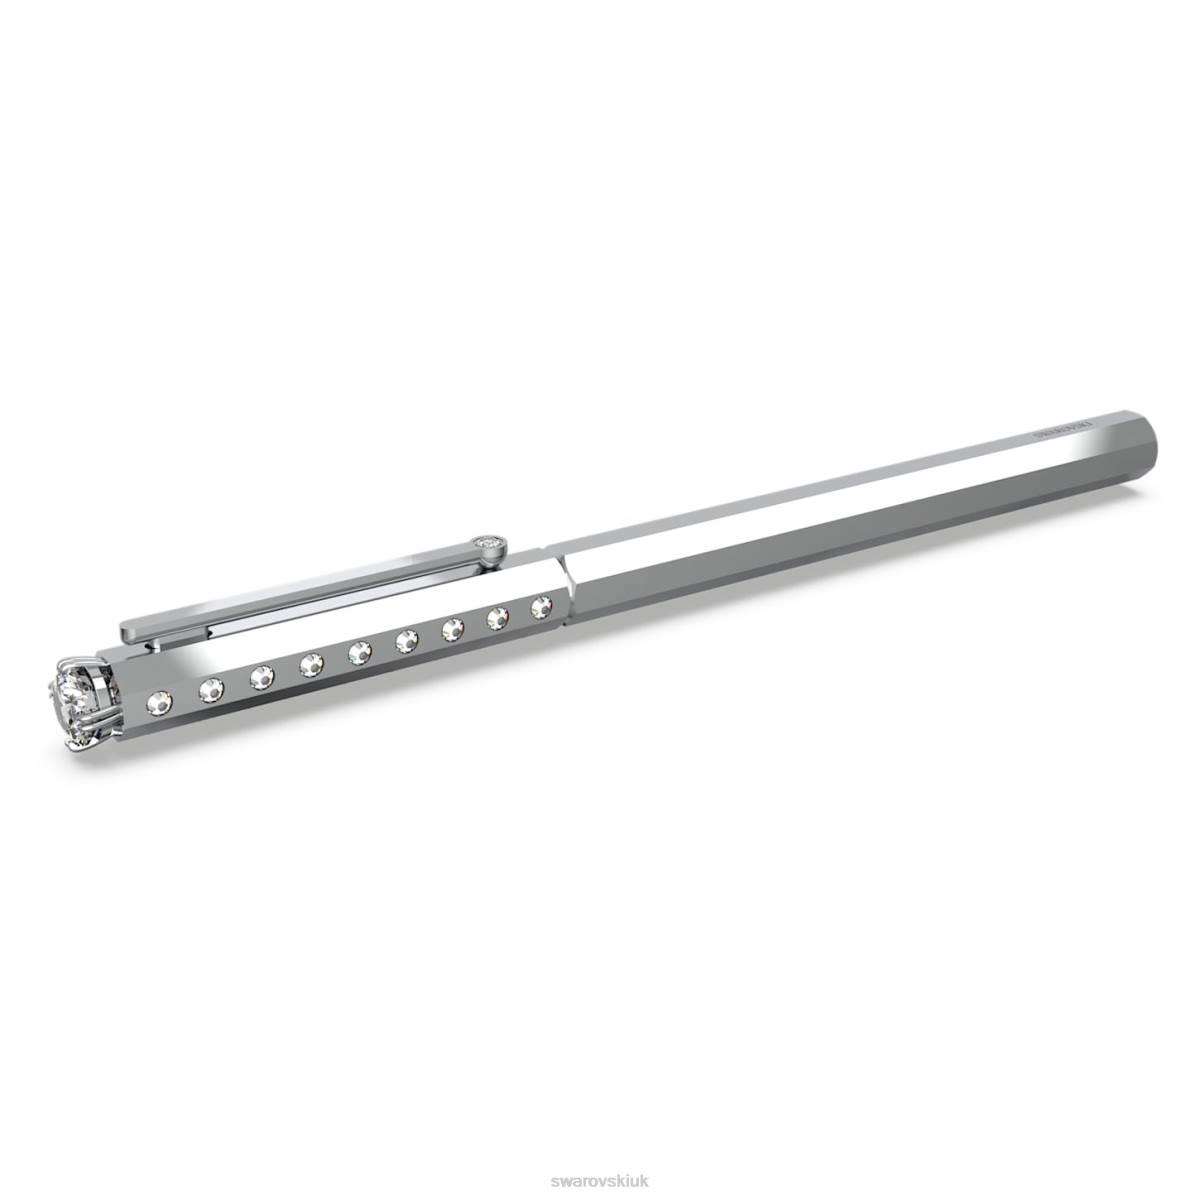 Accessories Swarovski Ballpoint pen Classic, Silver tone, Chrome plated 48JX1303